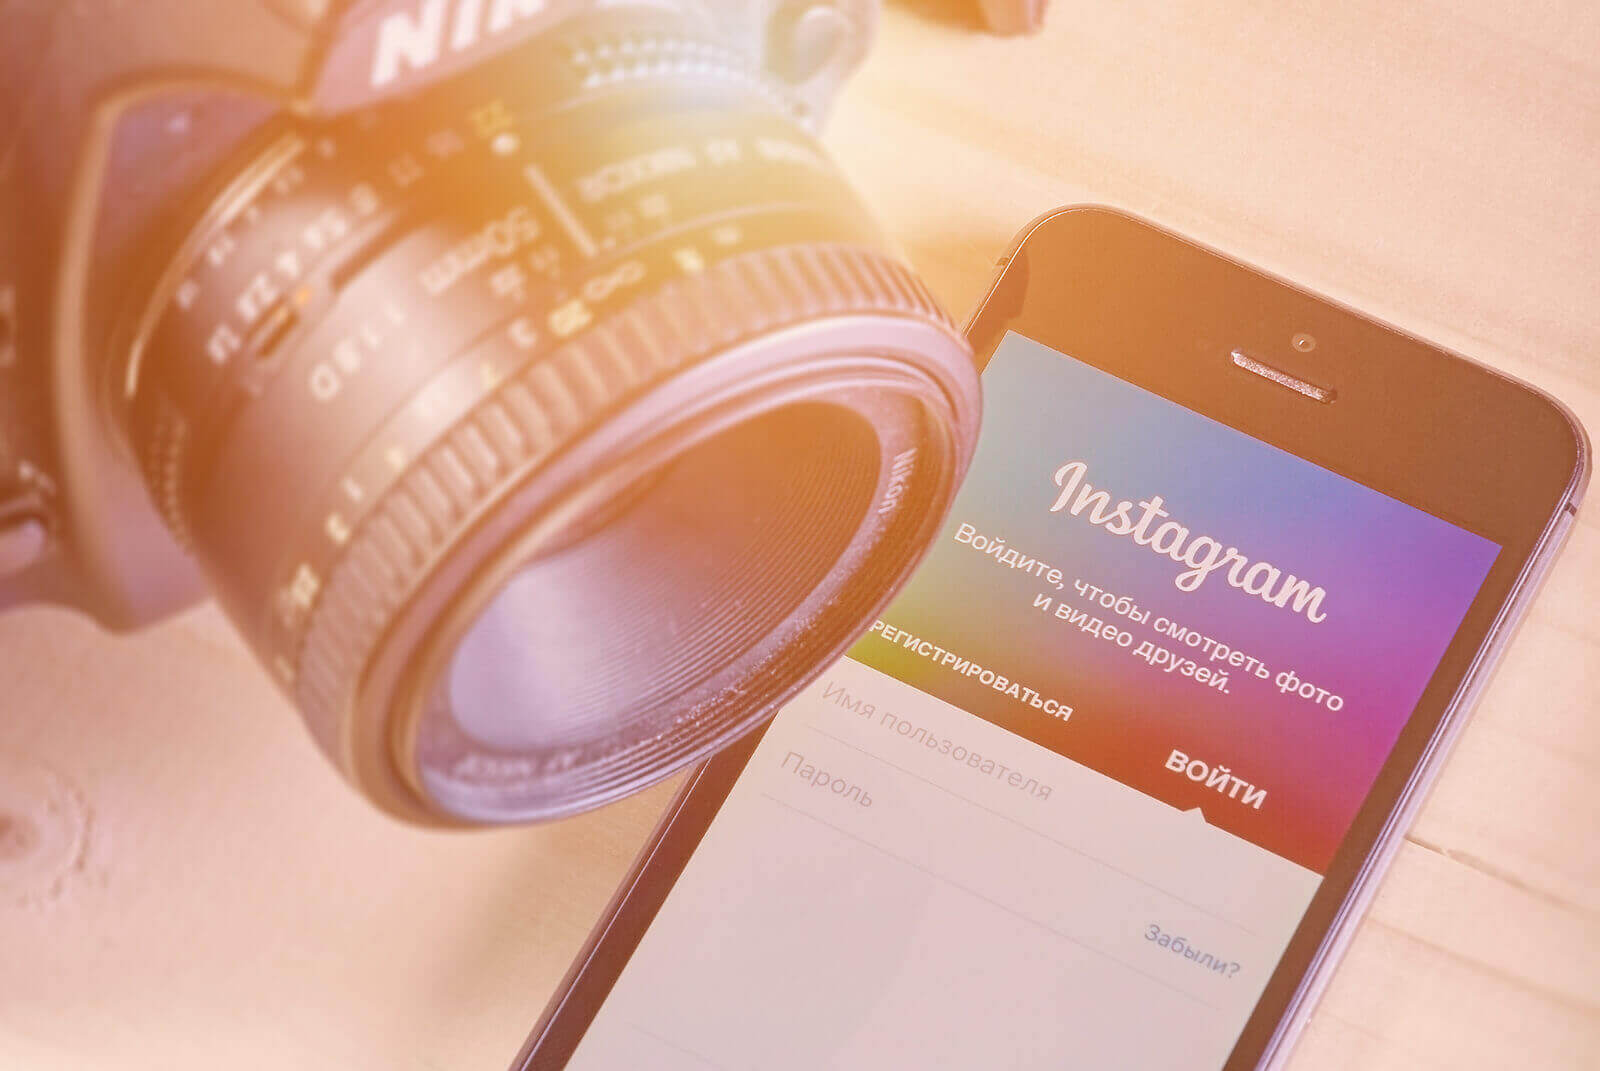 Best Instagram Brands: 10 Creative Brands to Follow for Inspiration